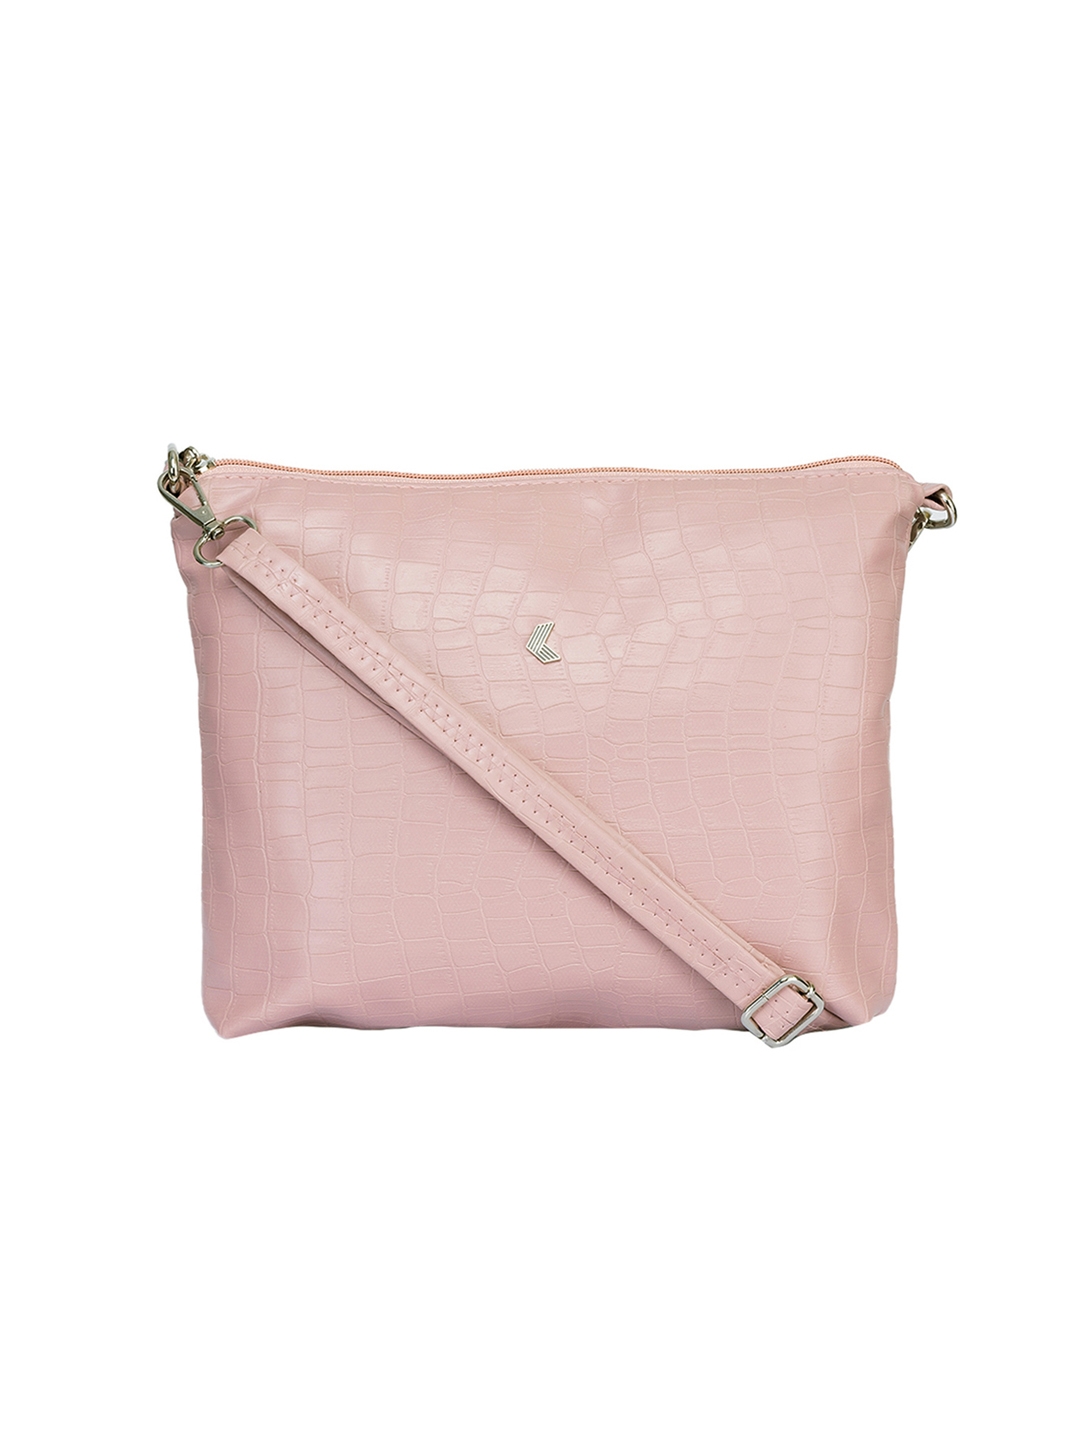 Women's Bag Leather Tote Bag | Crossbody Bag | Super Bag | Handbags - Brand  Luxury Handbags - Aliexpress